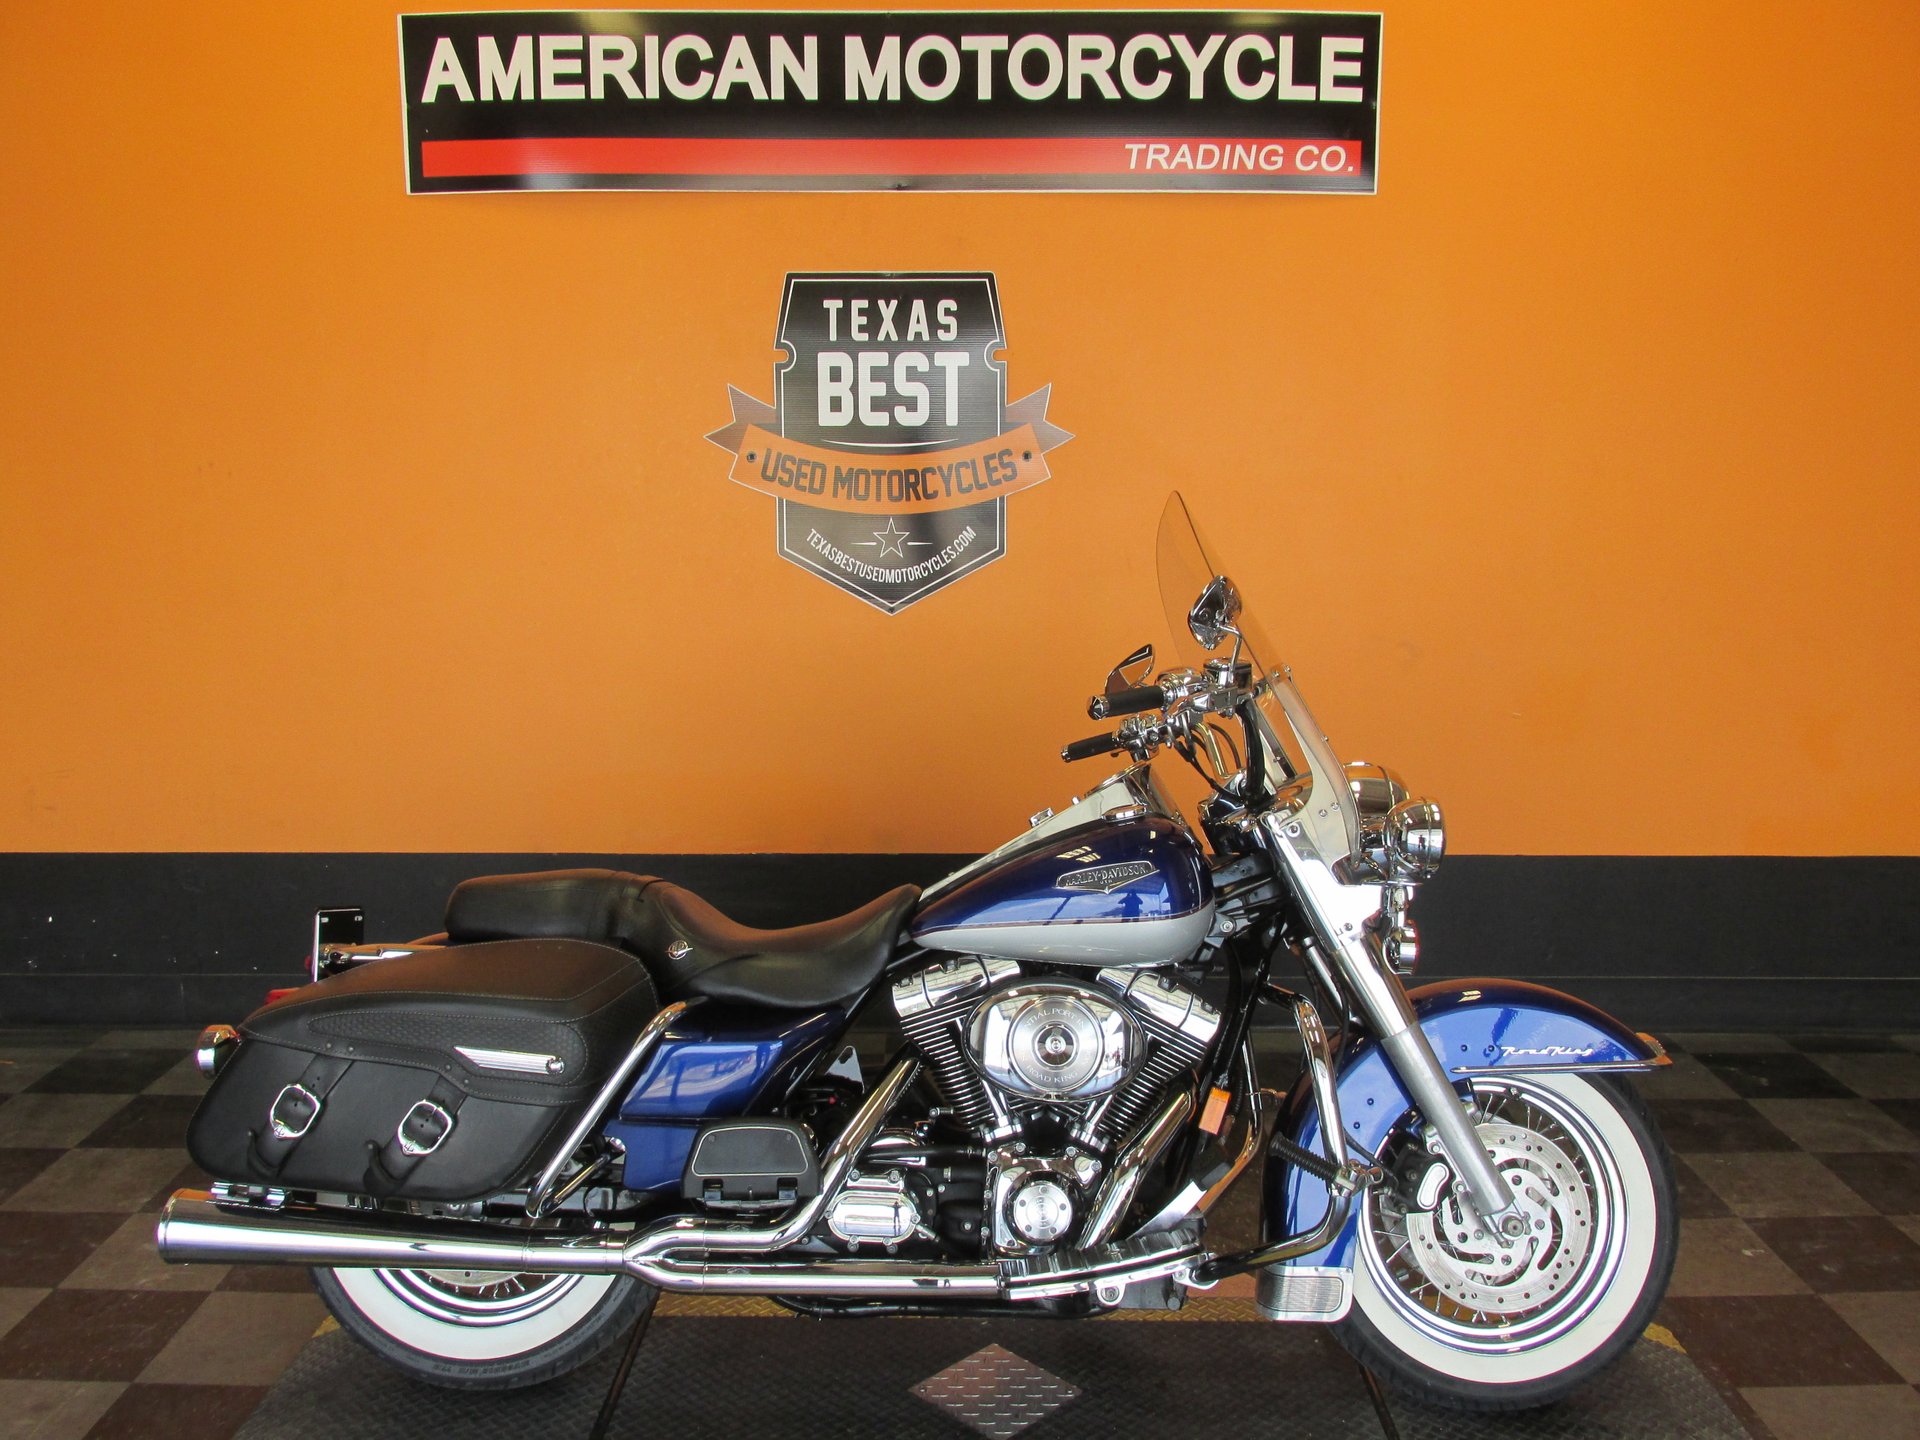 2006 Harley-Davidson Road King | American Motorcycle Trading Company - Used Harley  Davidson Motorcycles